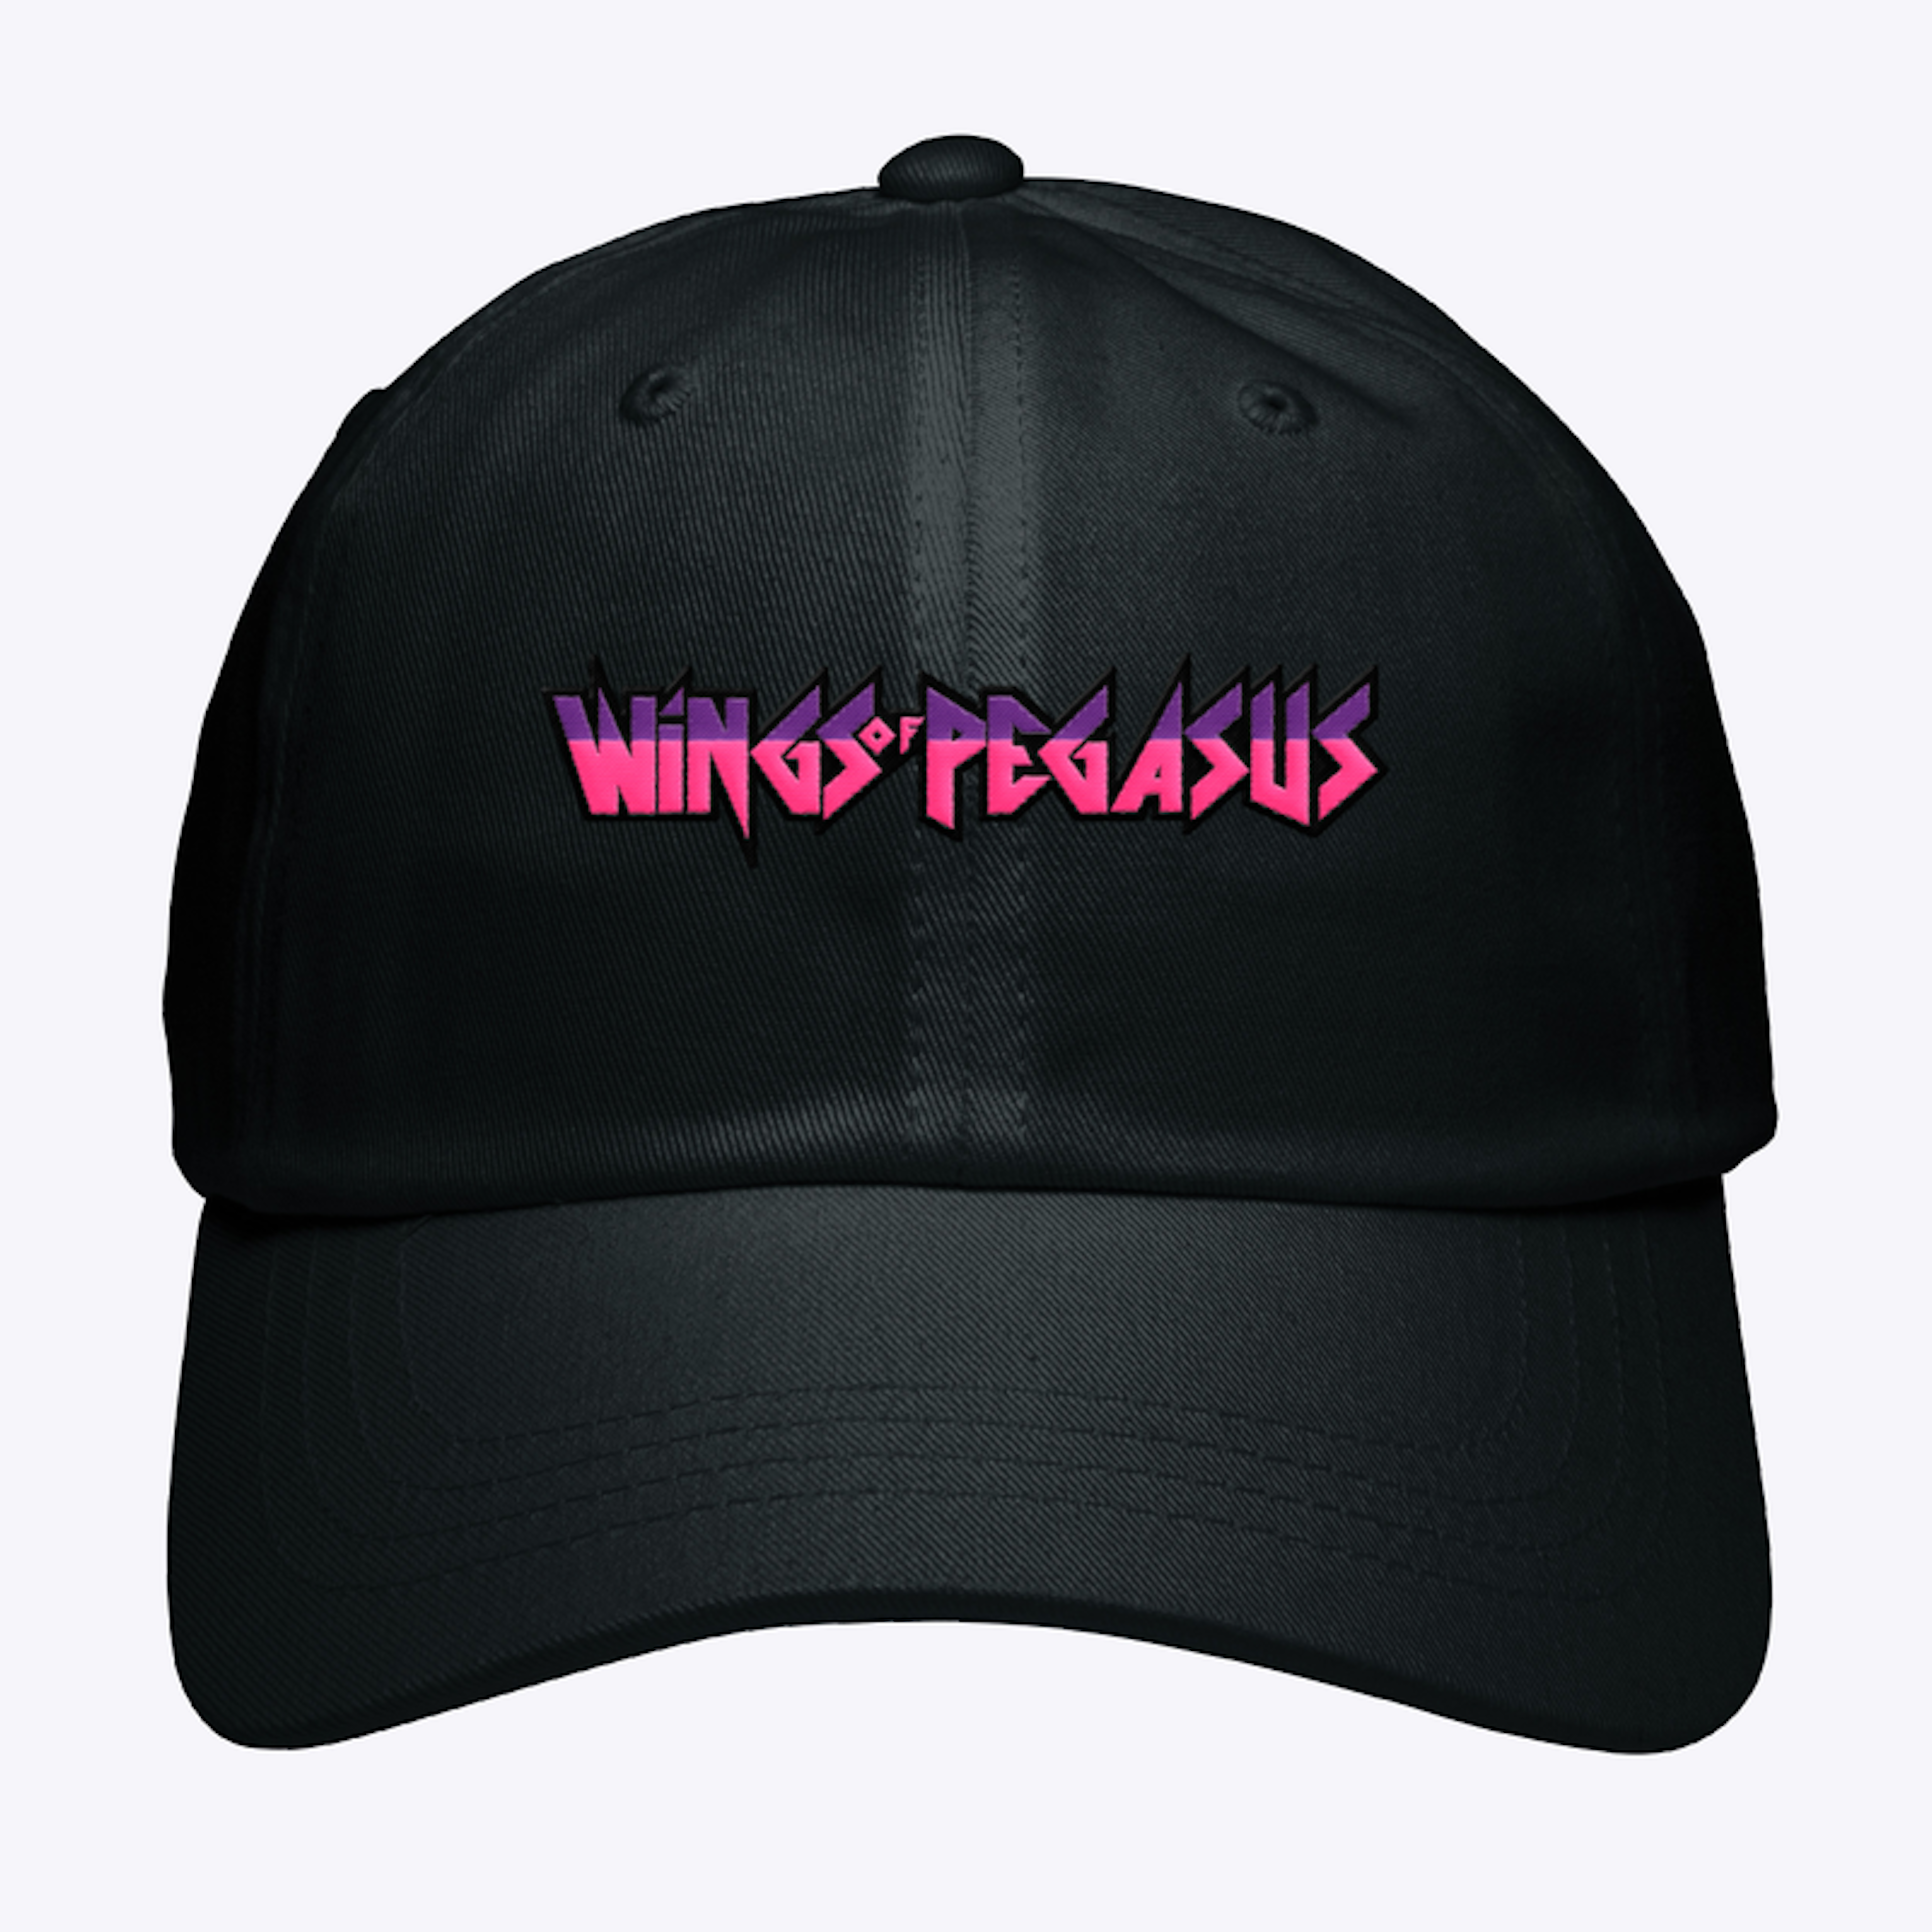 Wings of Pegasus hats